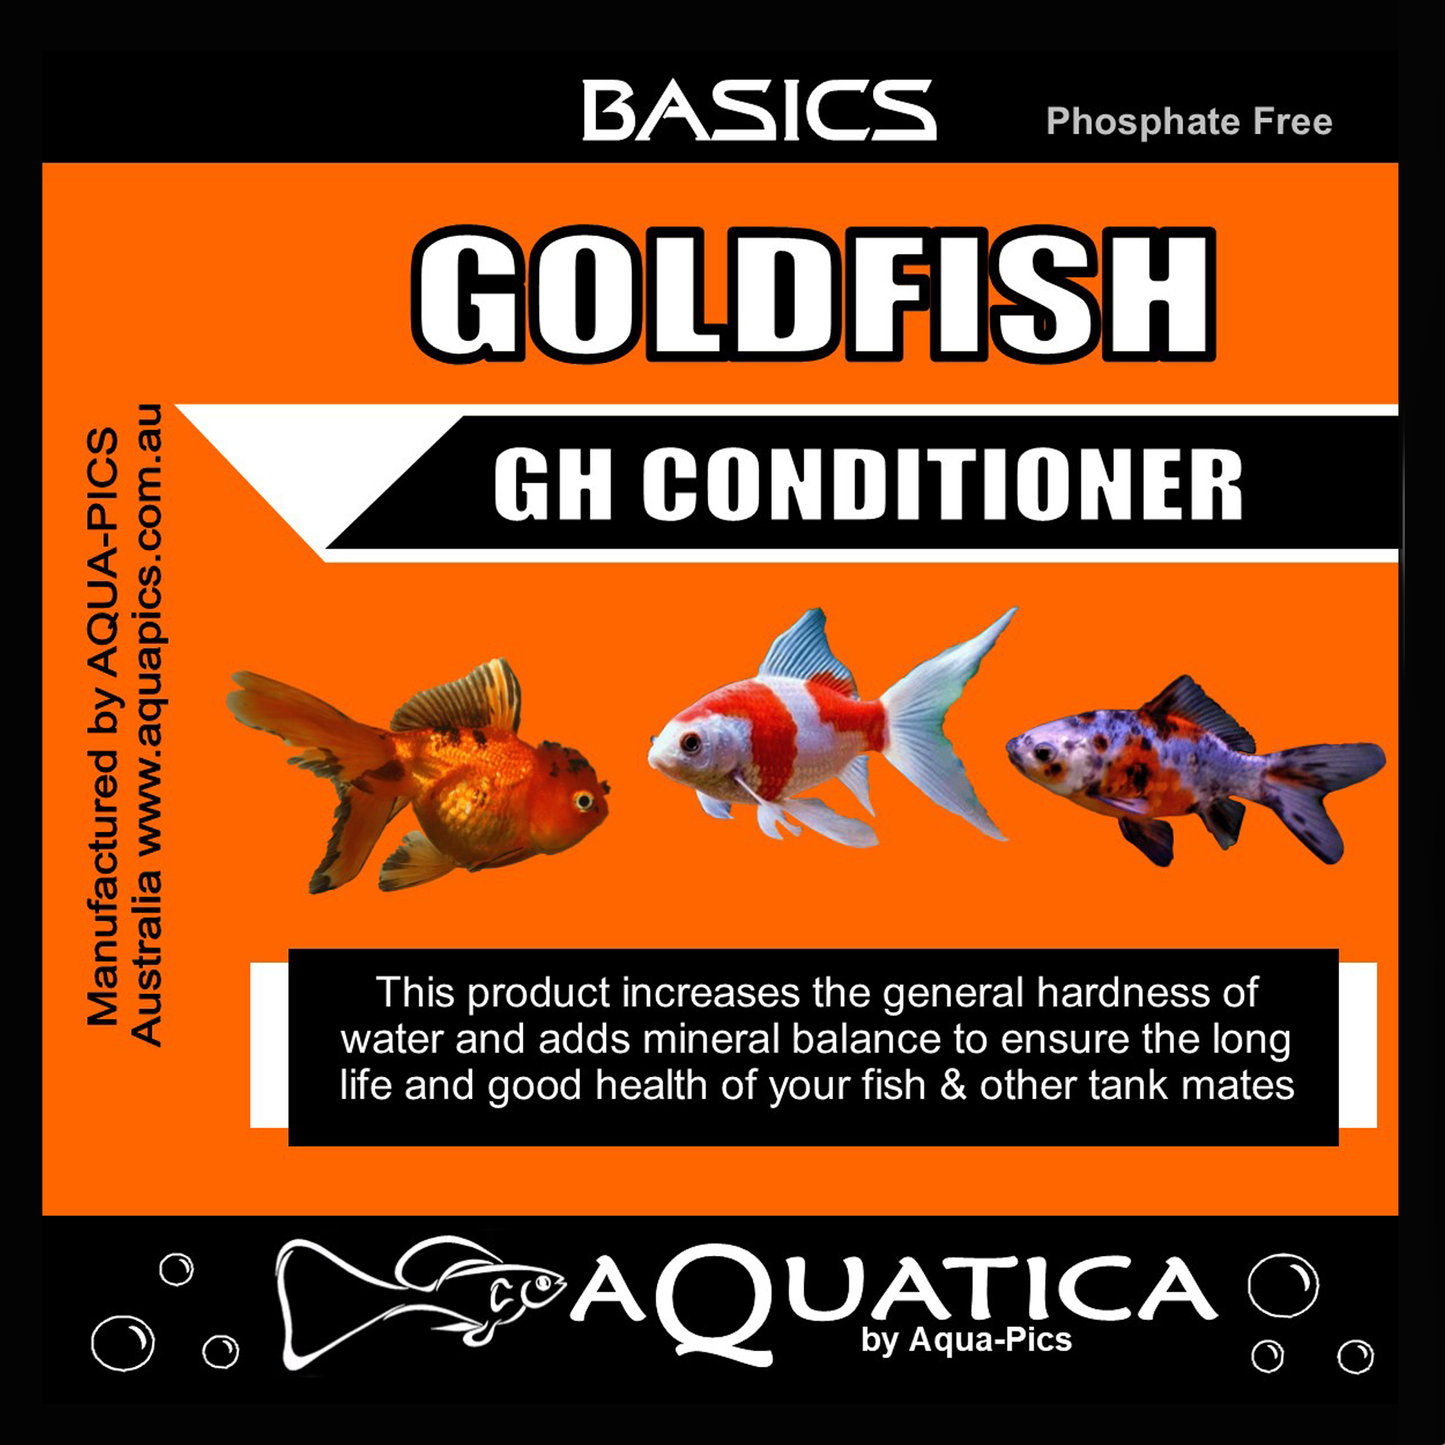 Aquatica Basics Goldfish GH Conditioner 4.5kg bag